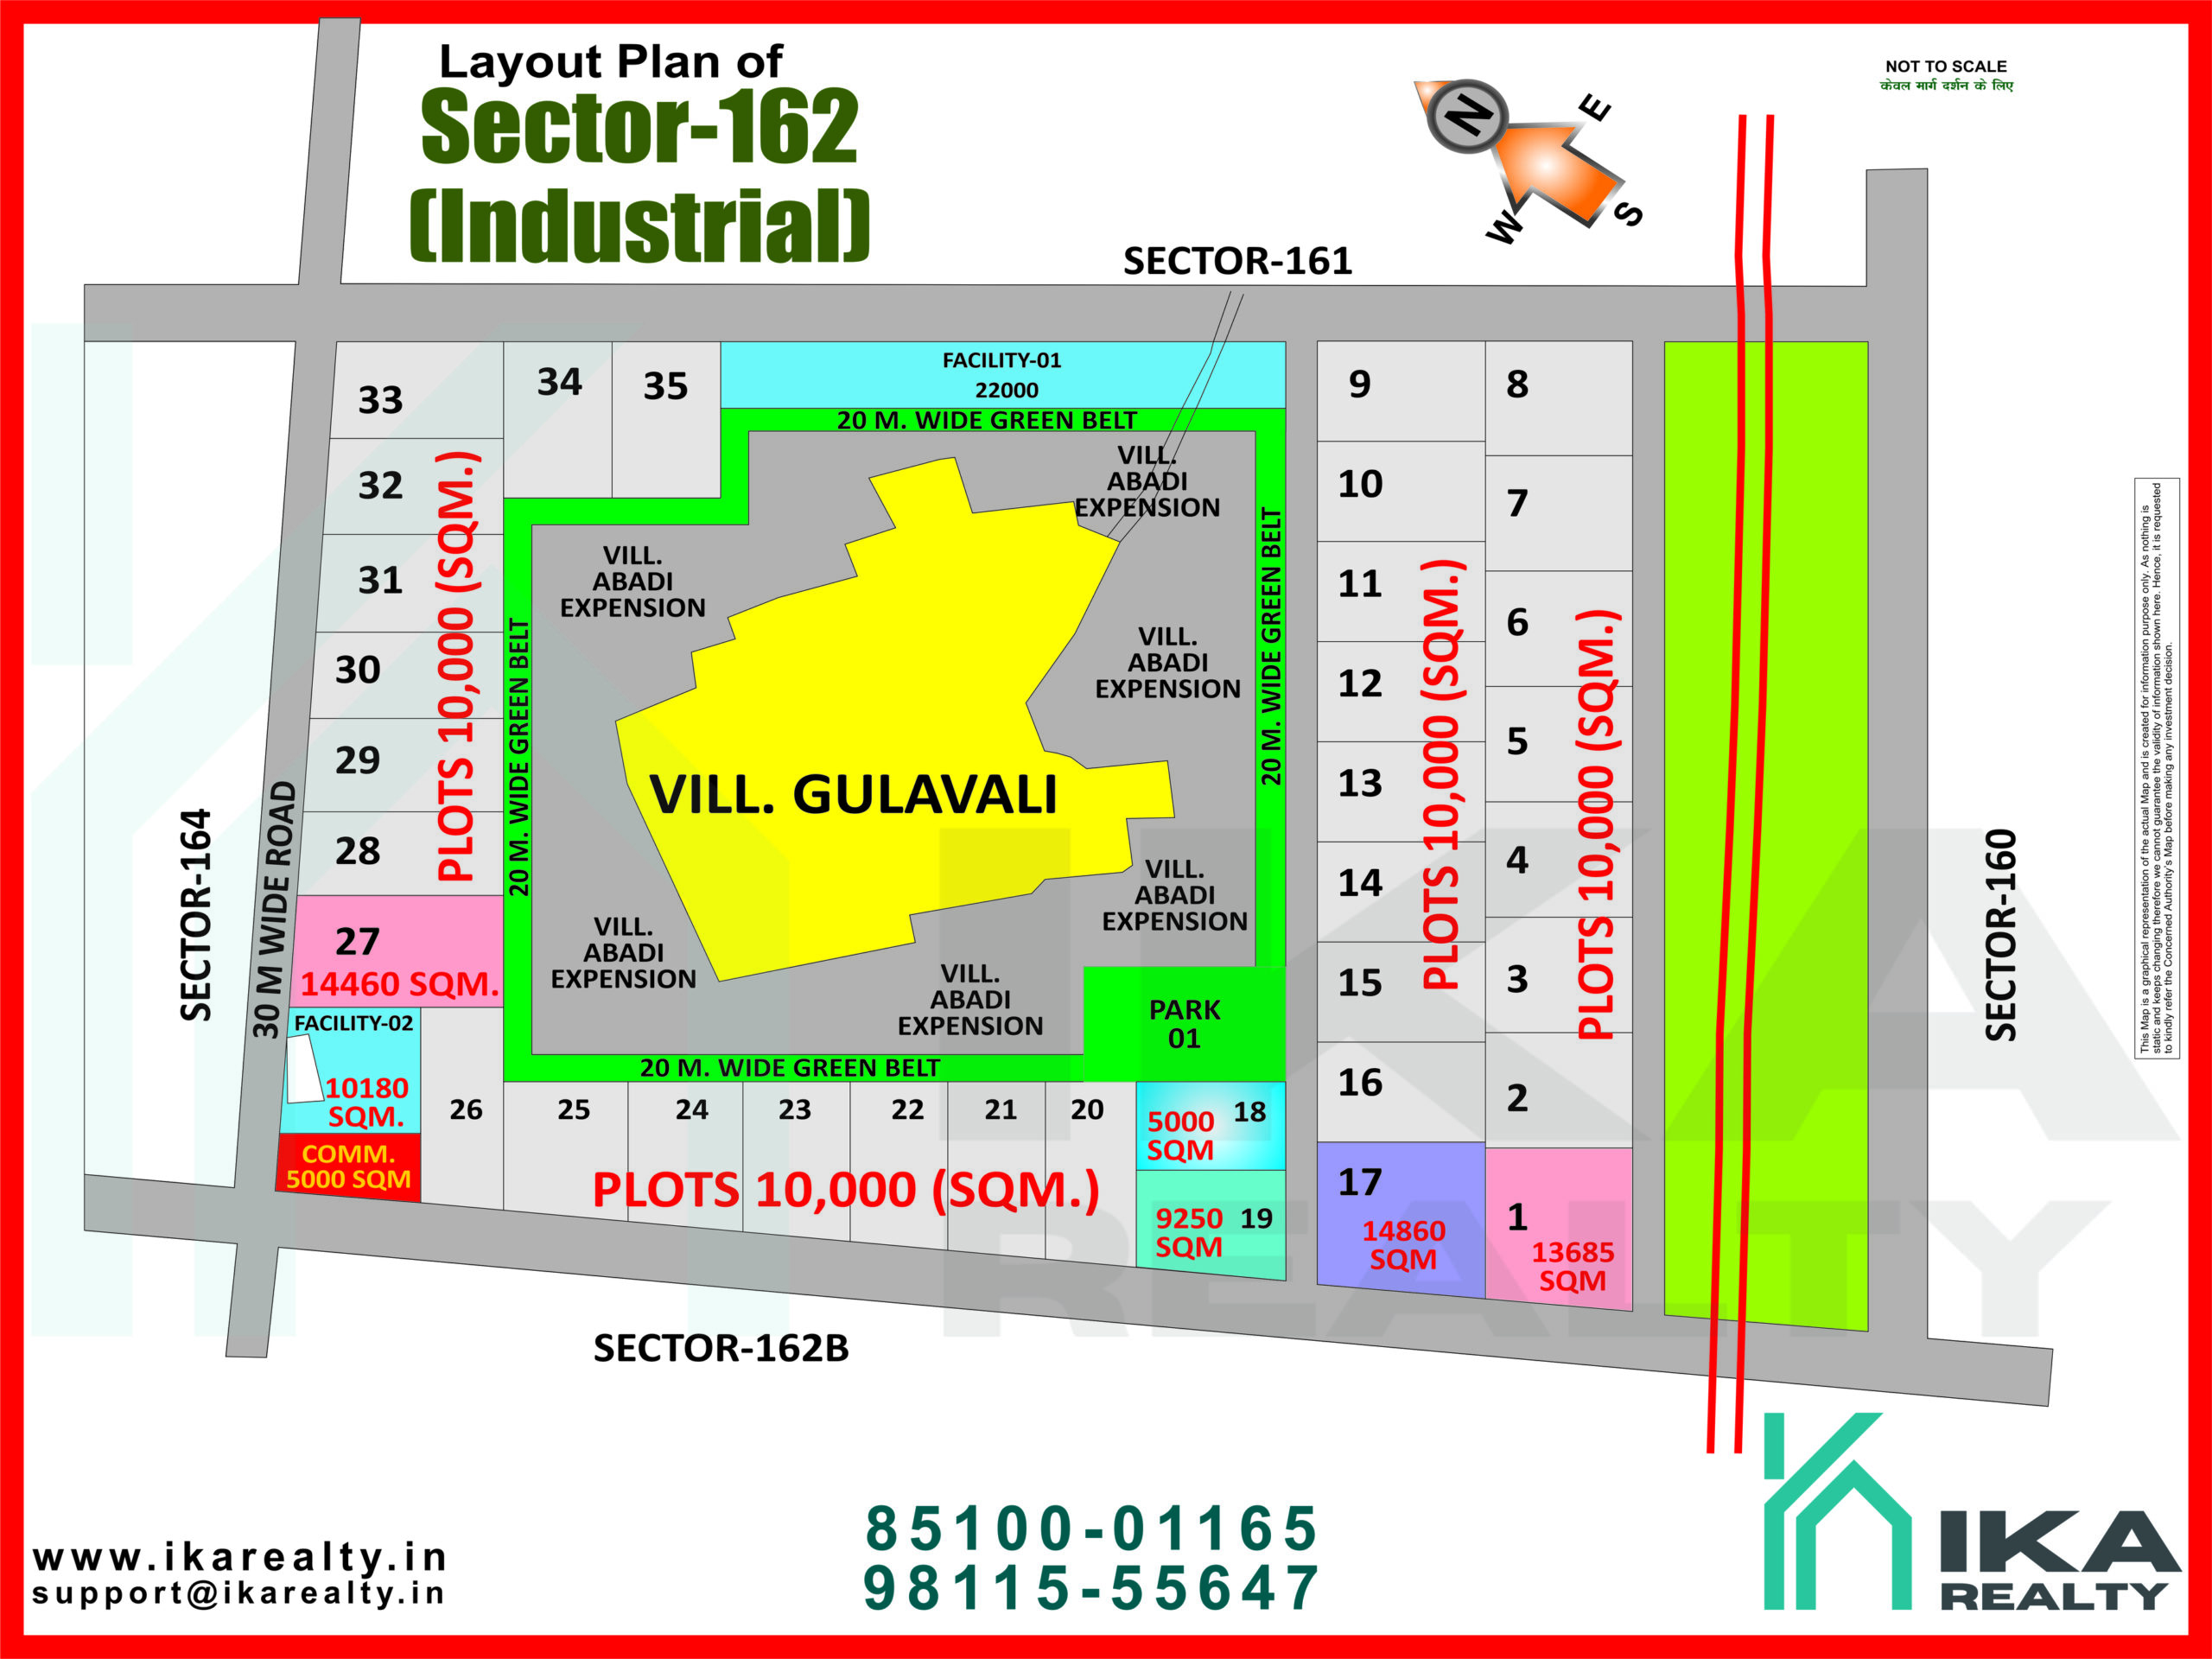 Sector-162 (Industrial)